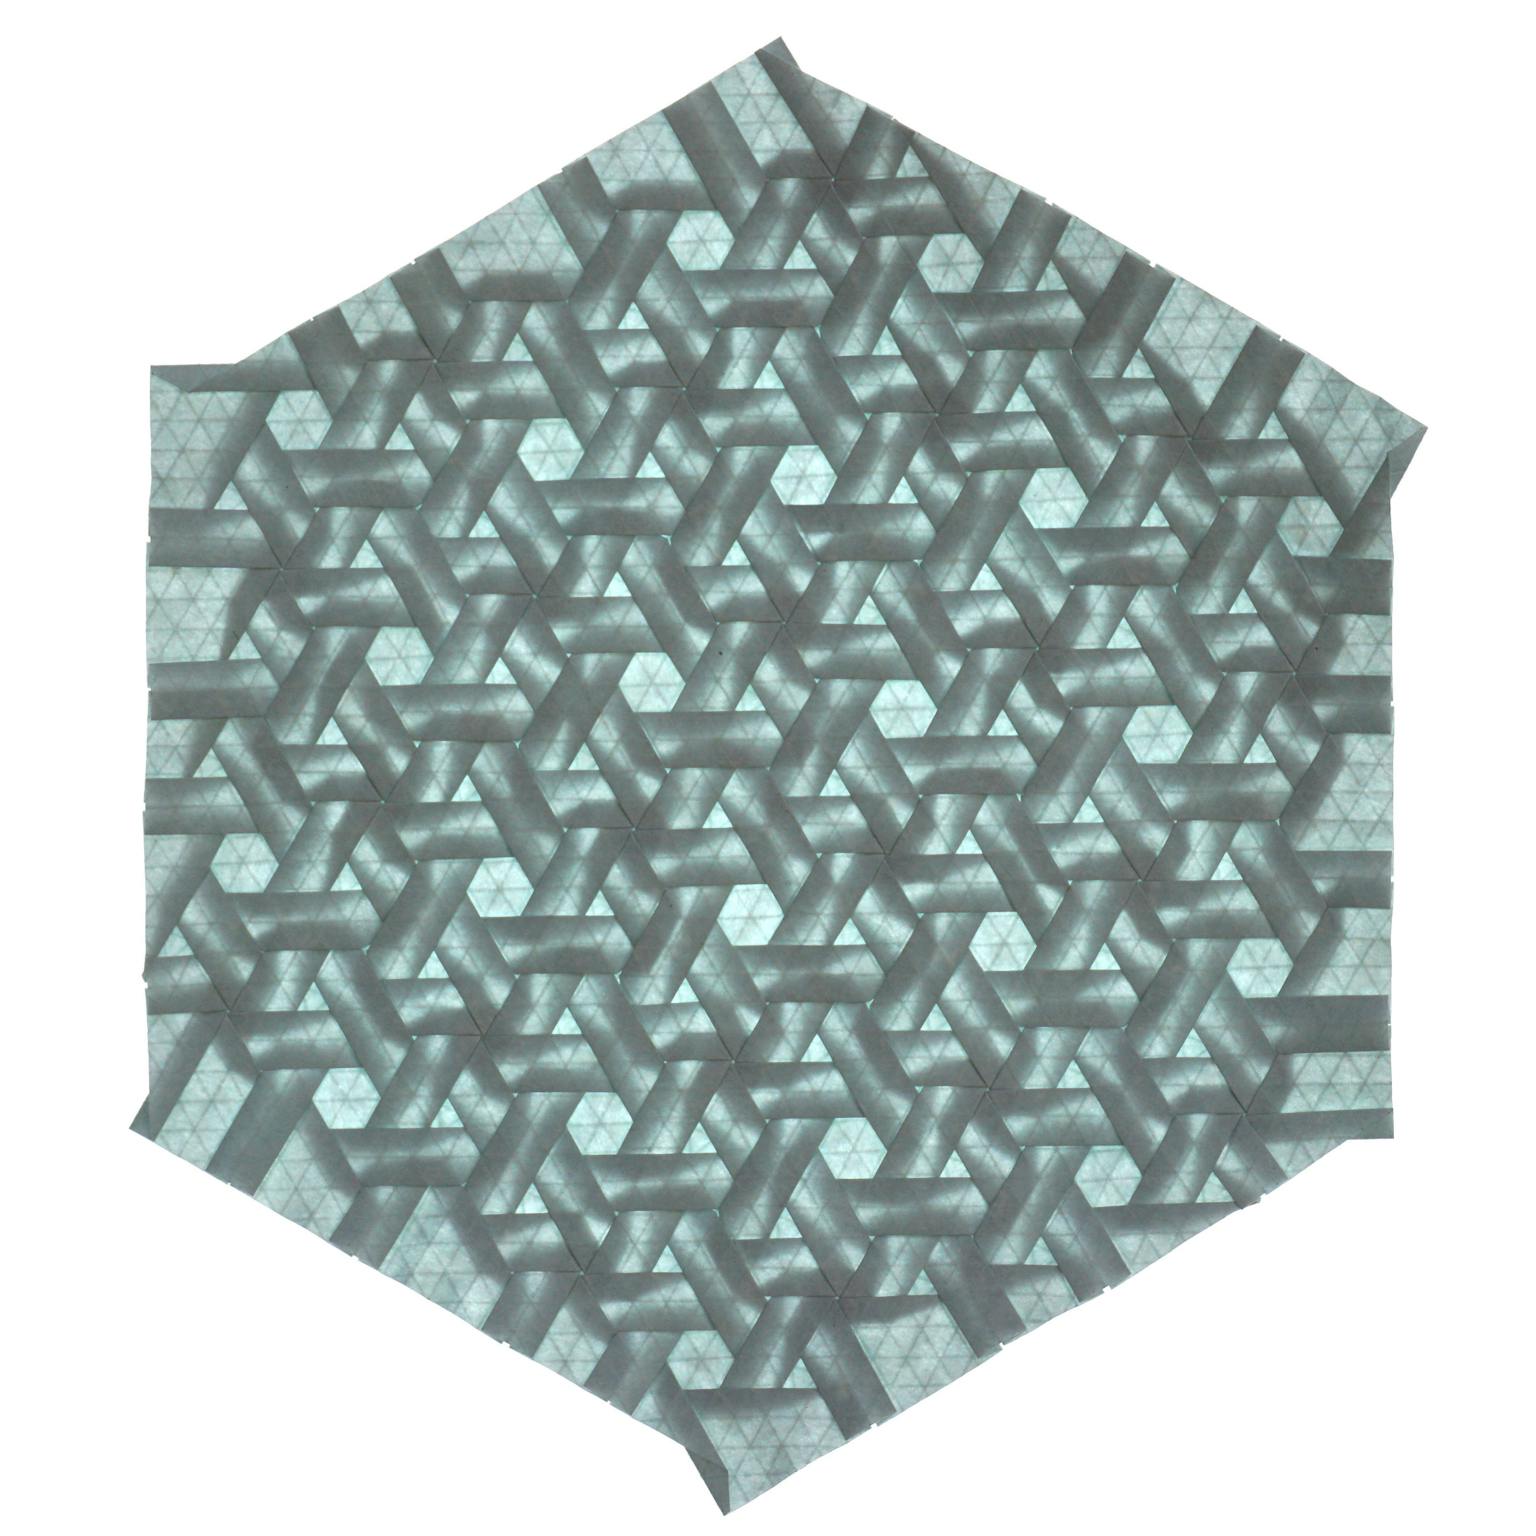 Image for entry 'Hybrid Hexagon Weave'